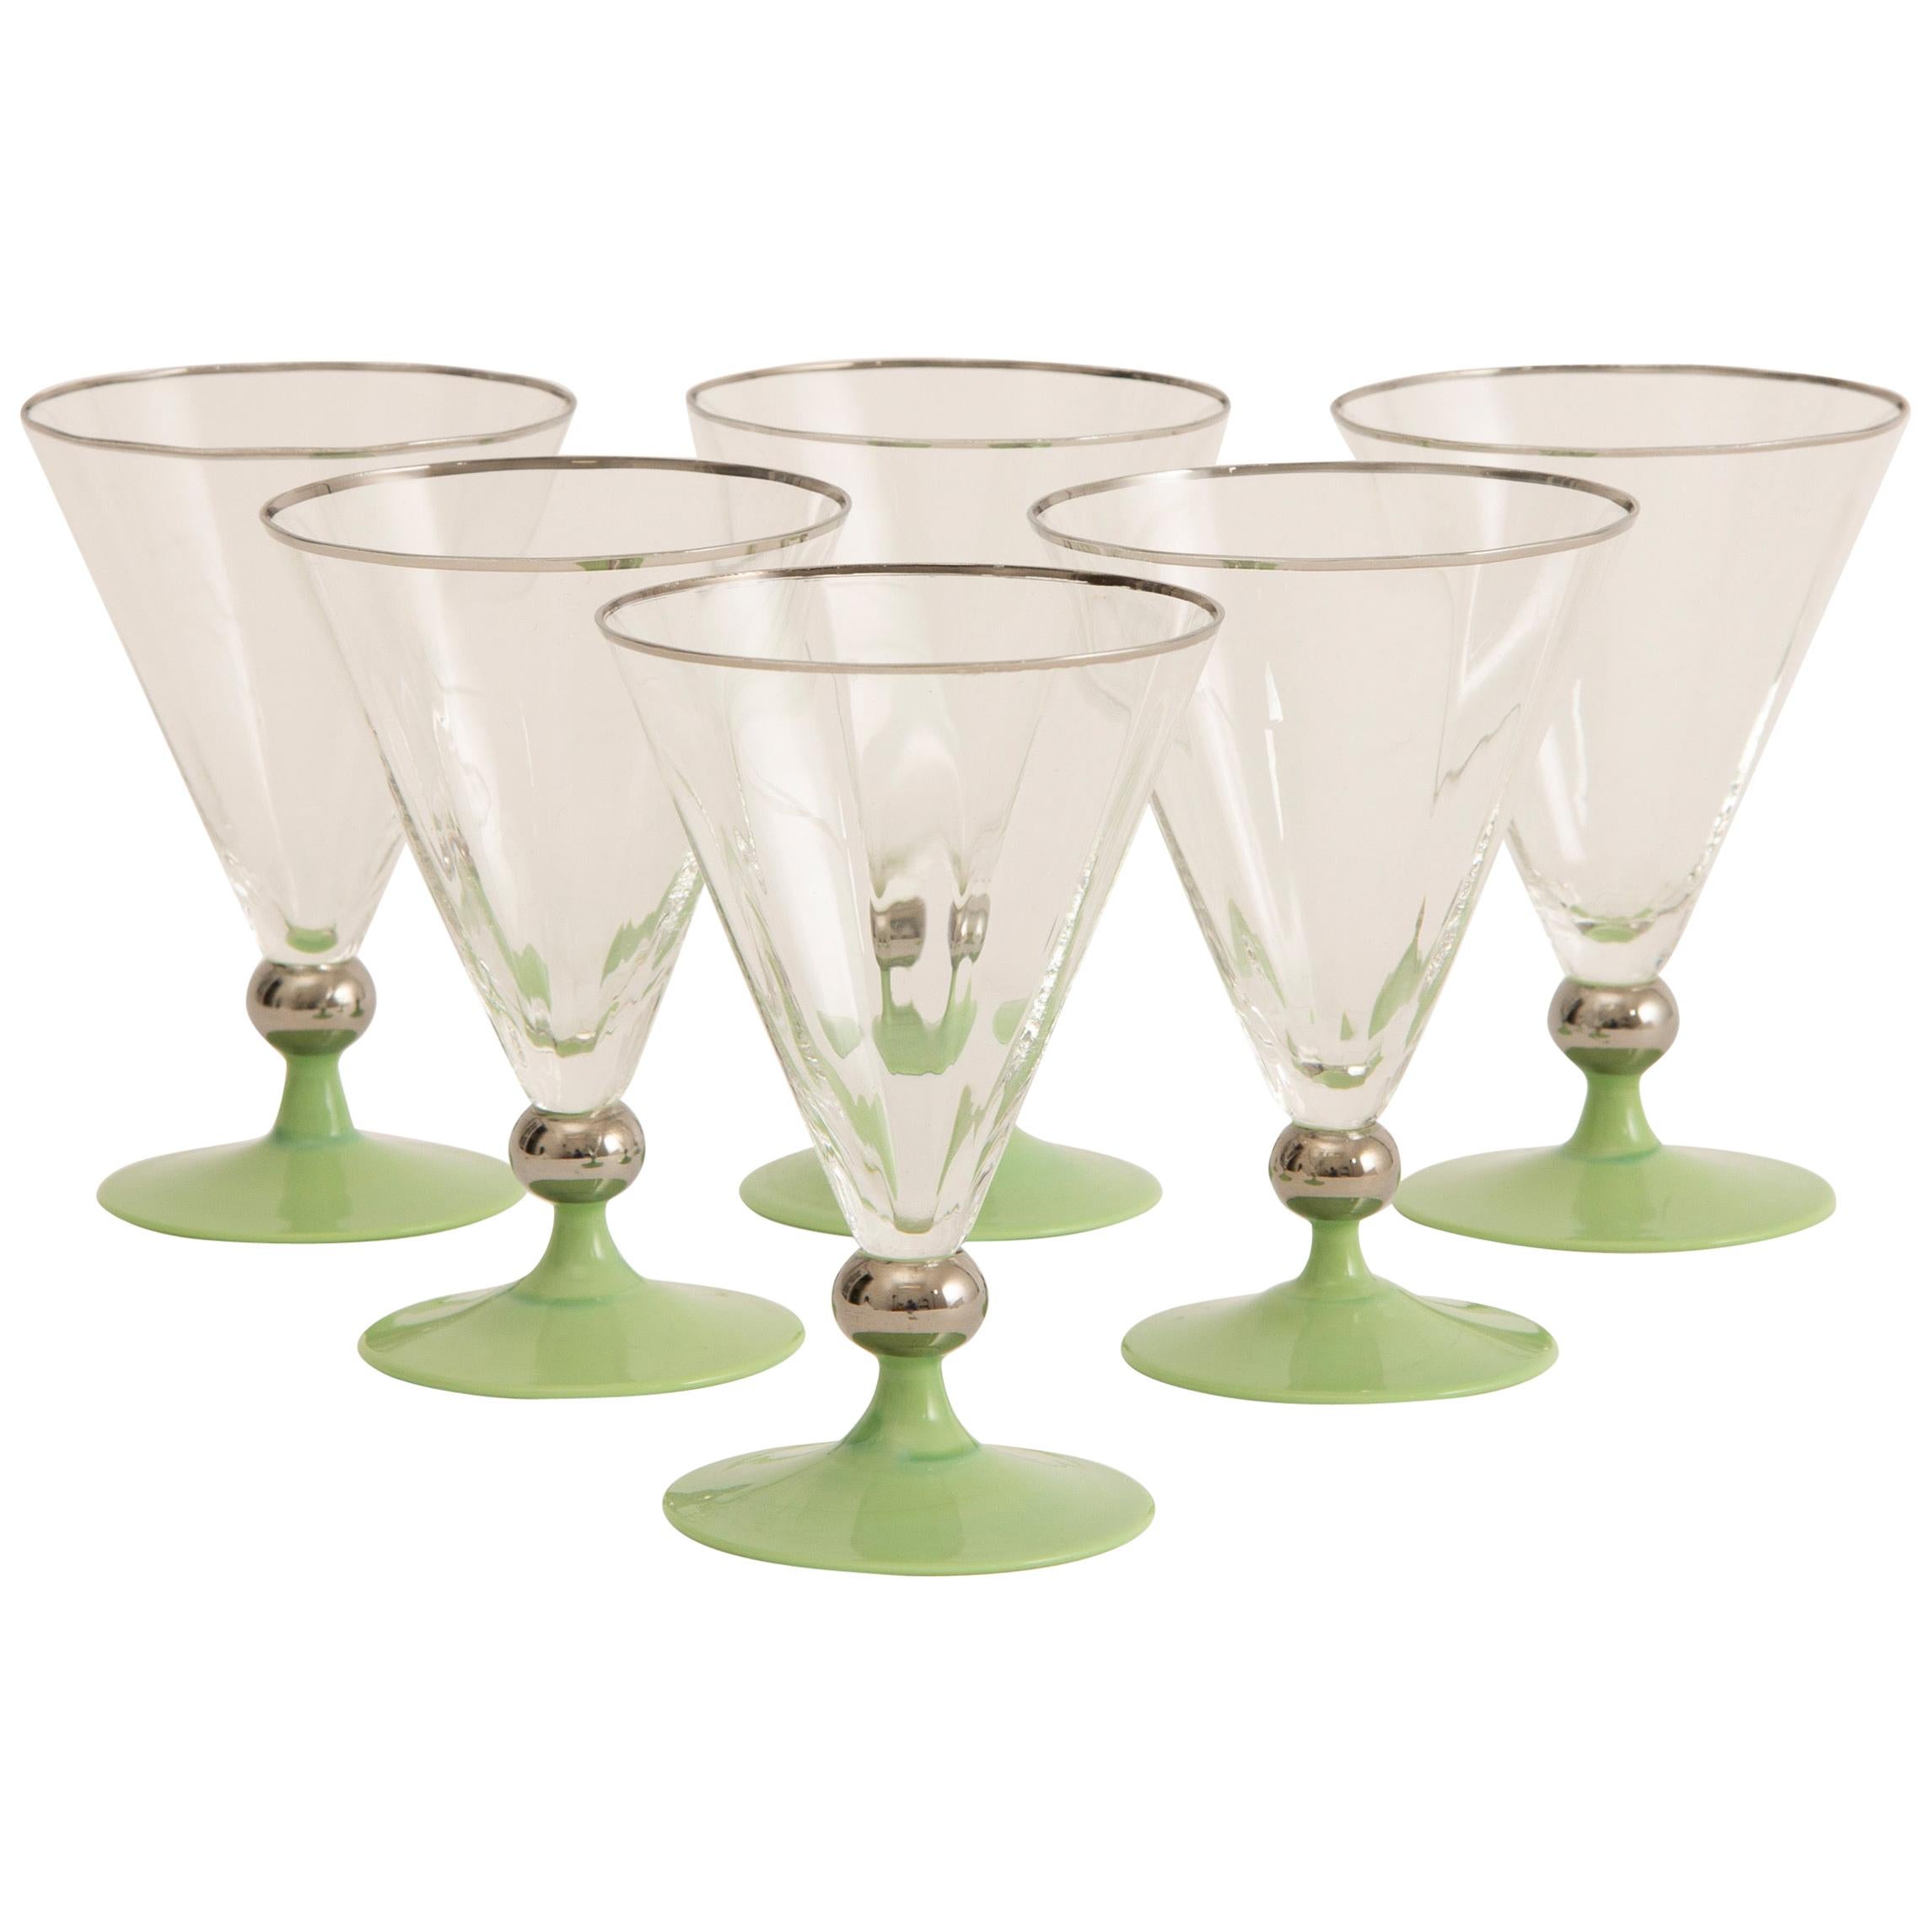 Set of 6 Art Deco Cocktail Glasses